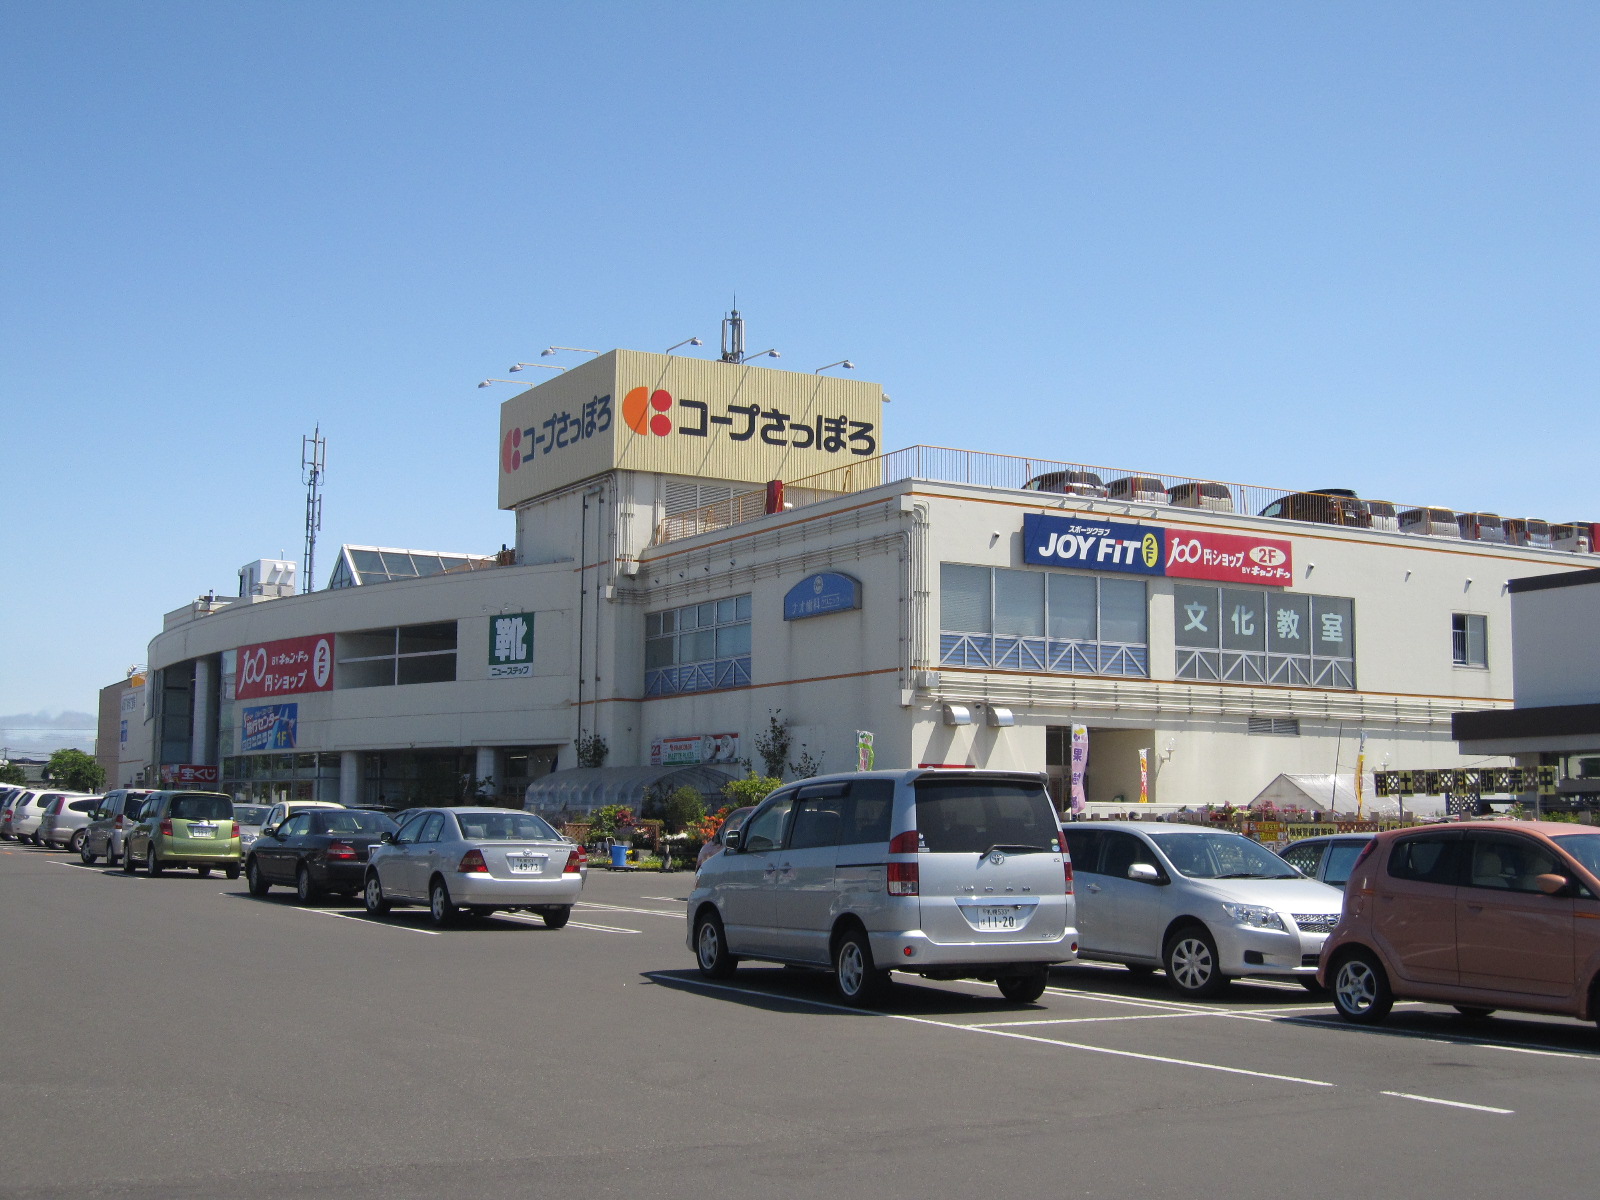 Supermarket. KopuSapporo Hiraoka store up to (super) 666m